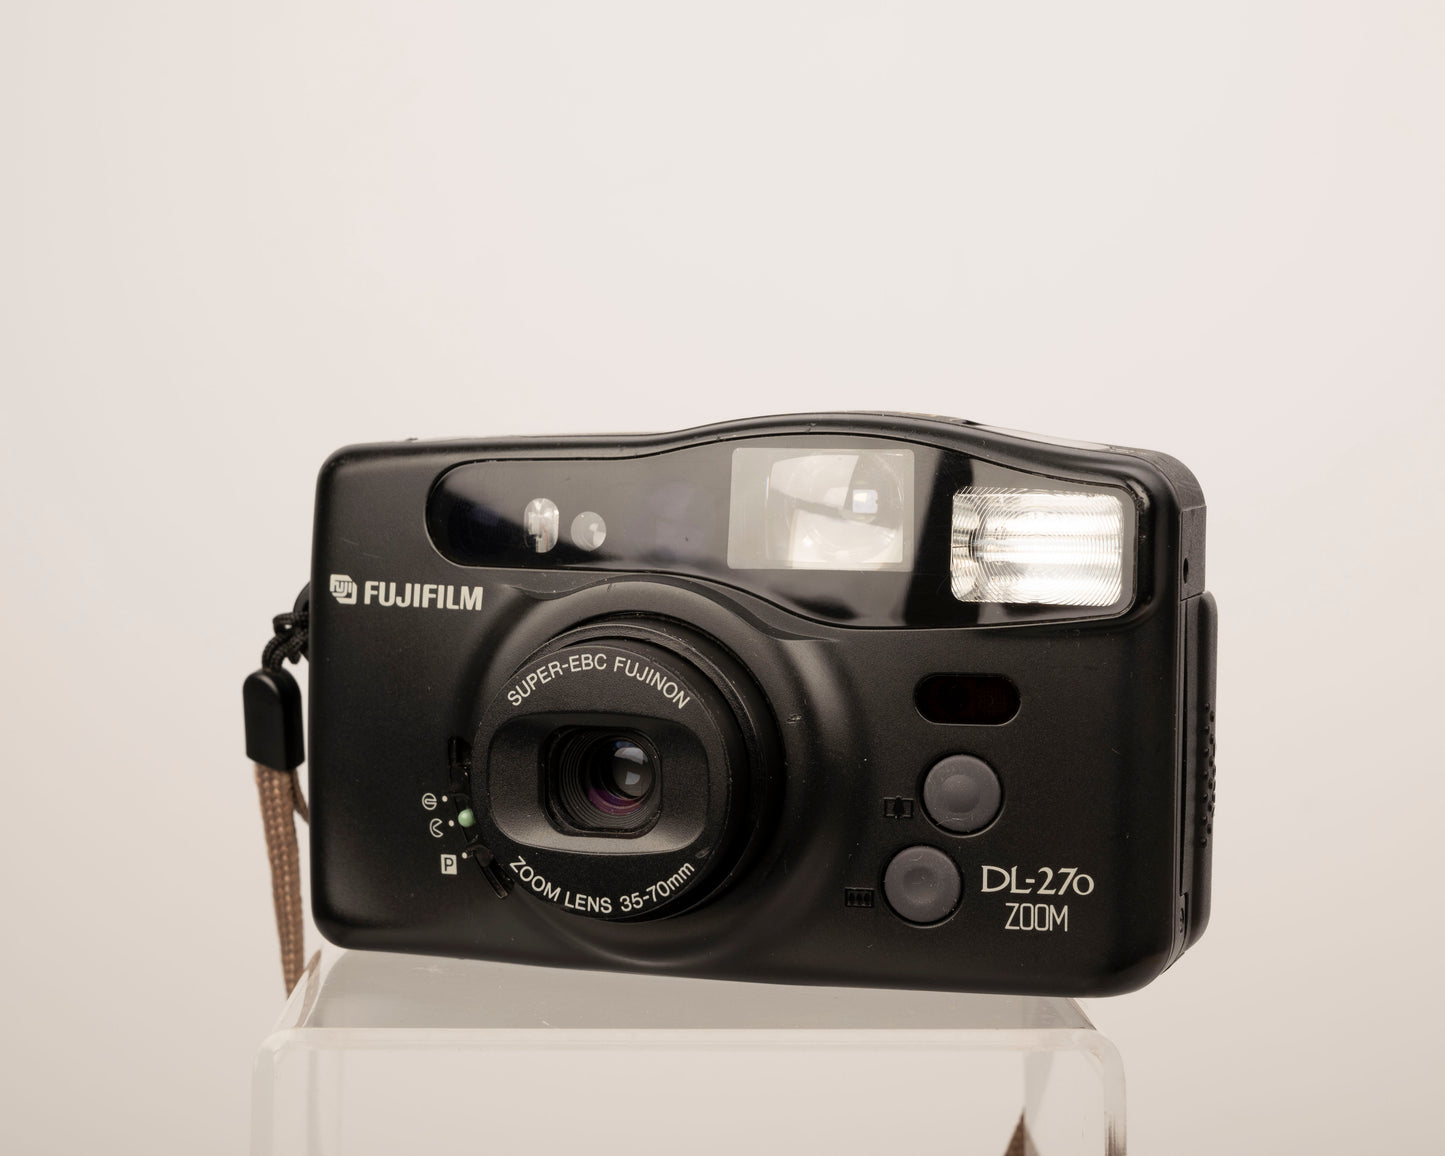 Fujifilm DL-270 Zoom 35mm camera with original box, case, and manual (serial 80500003)